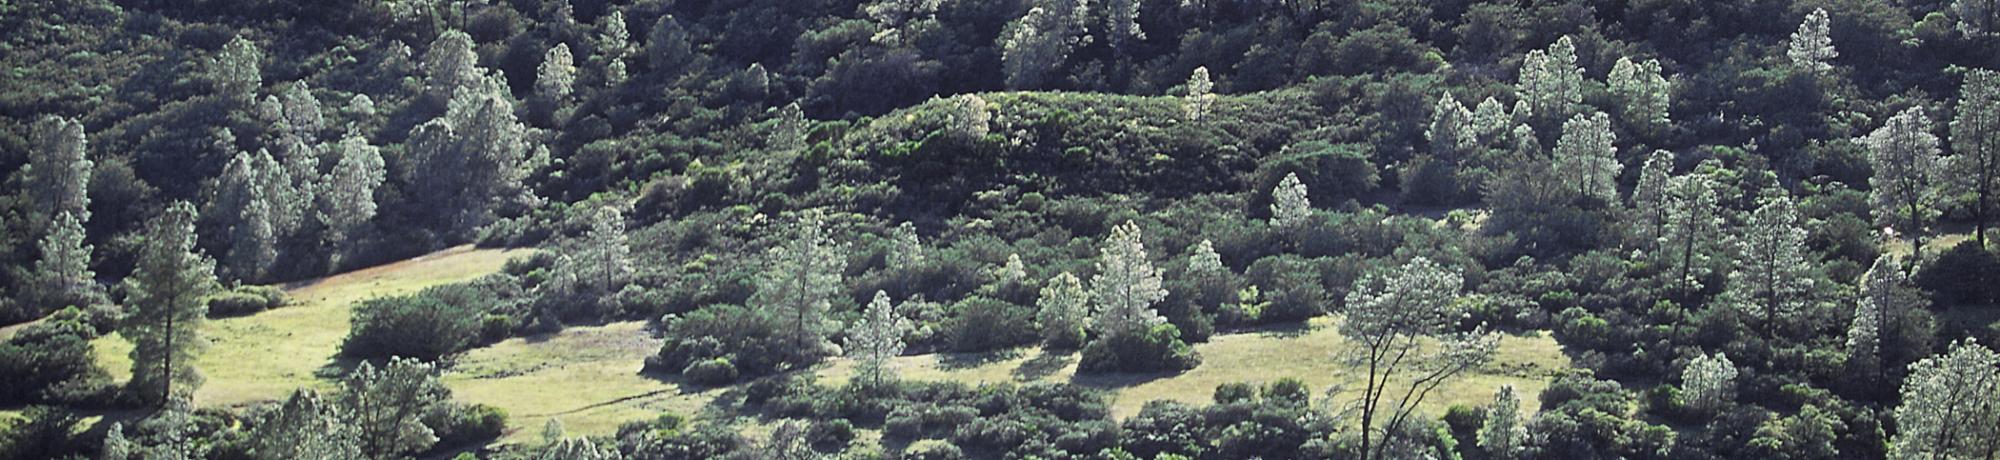 gray pines